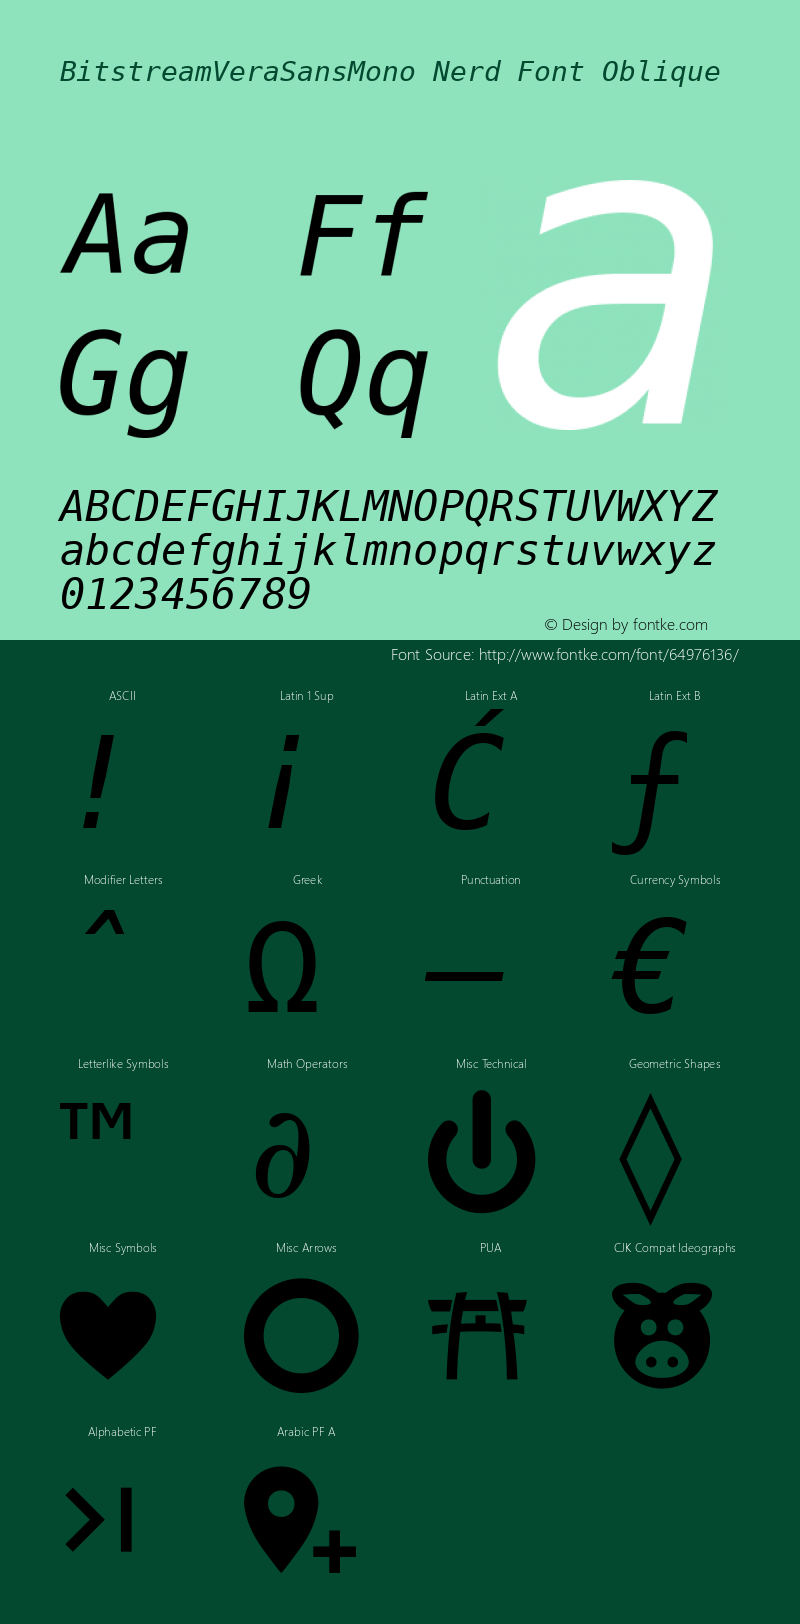 Bitstream Vera Sans Mono Oblique Nerd Font Complete Release 1.10 Font Sample